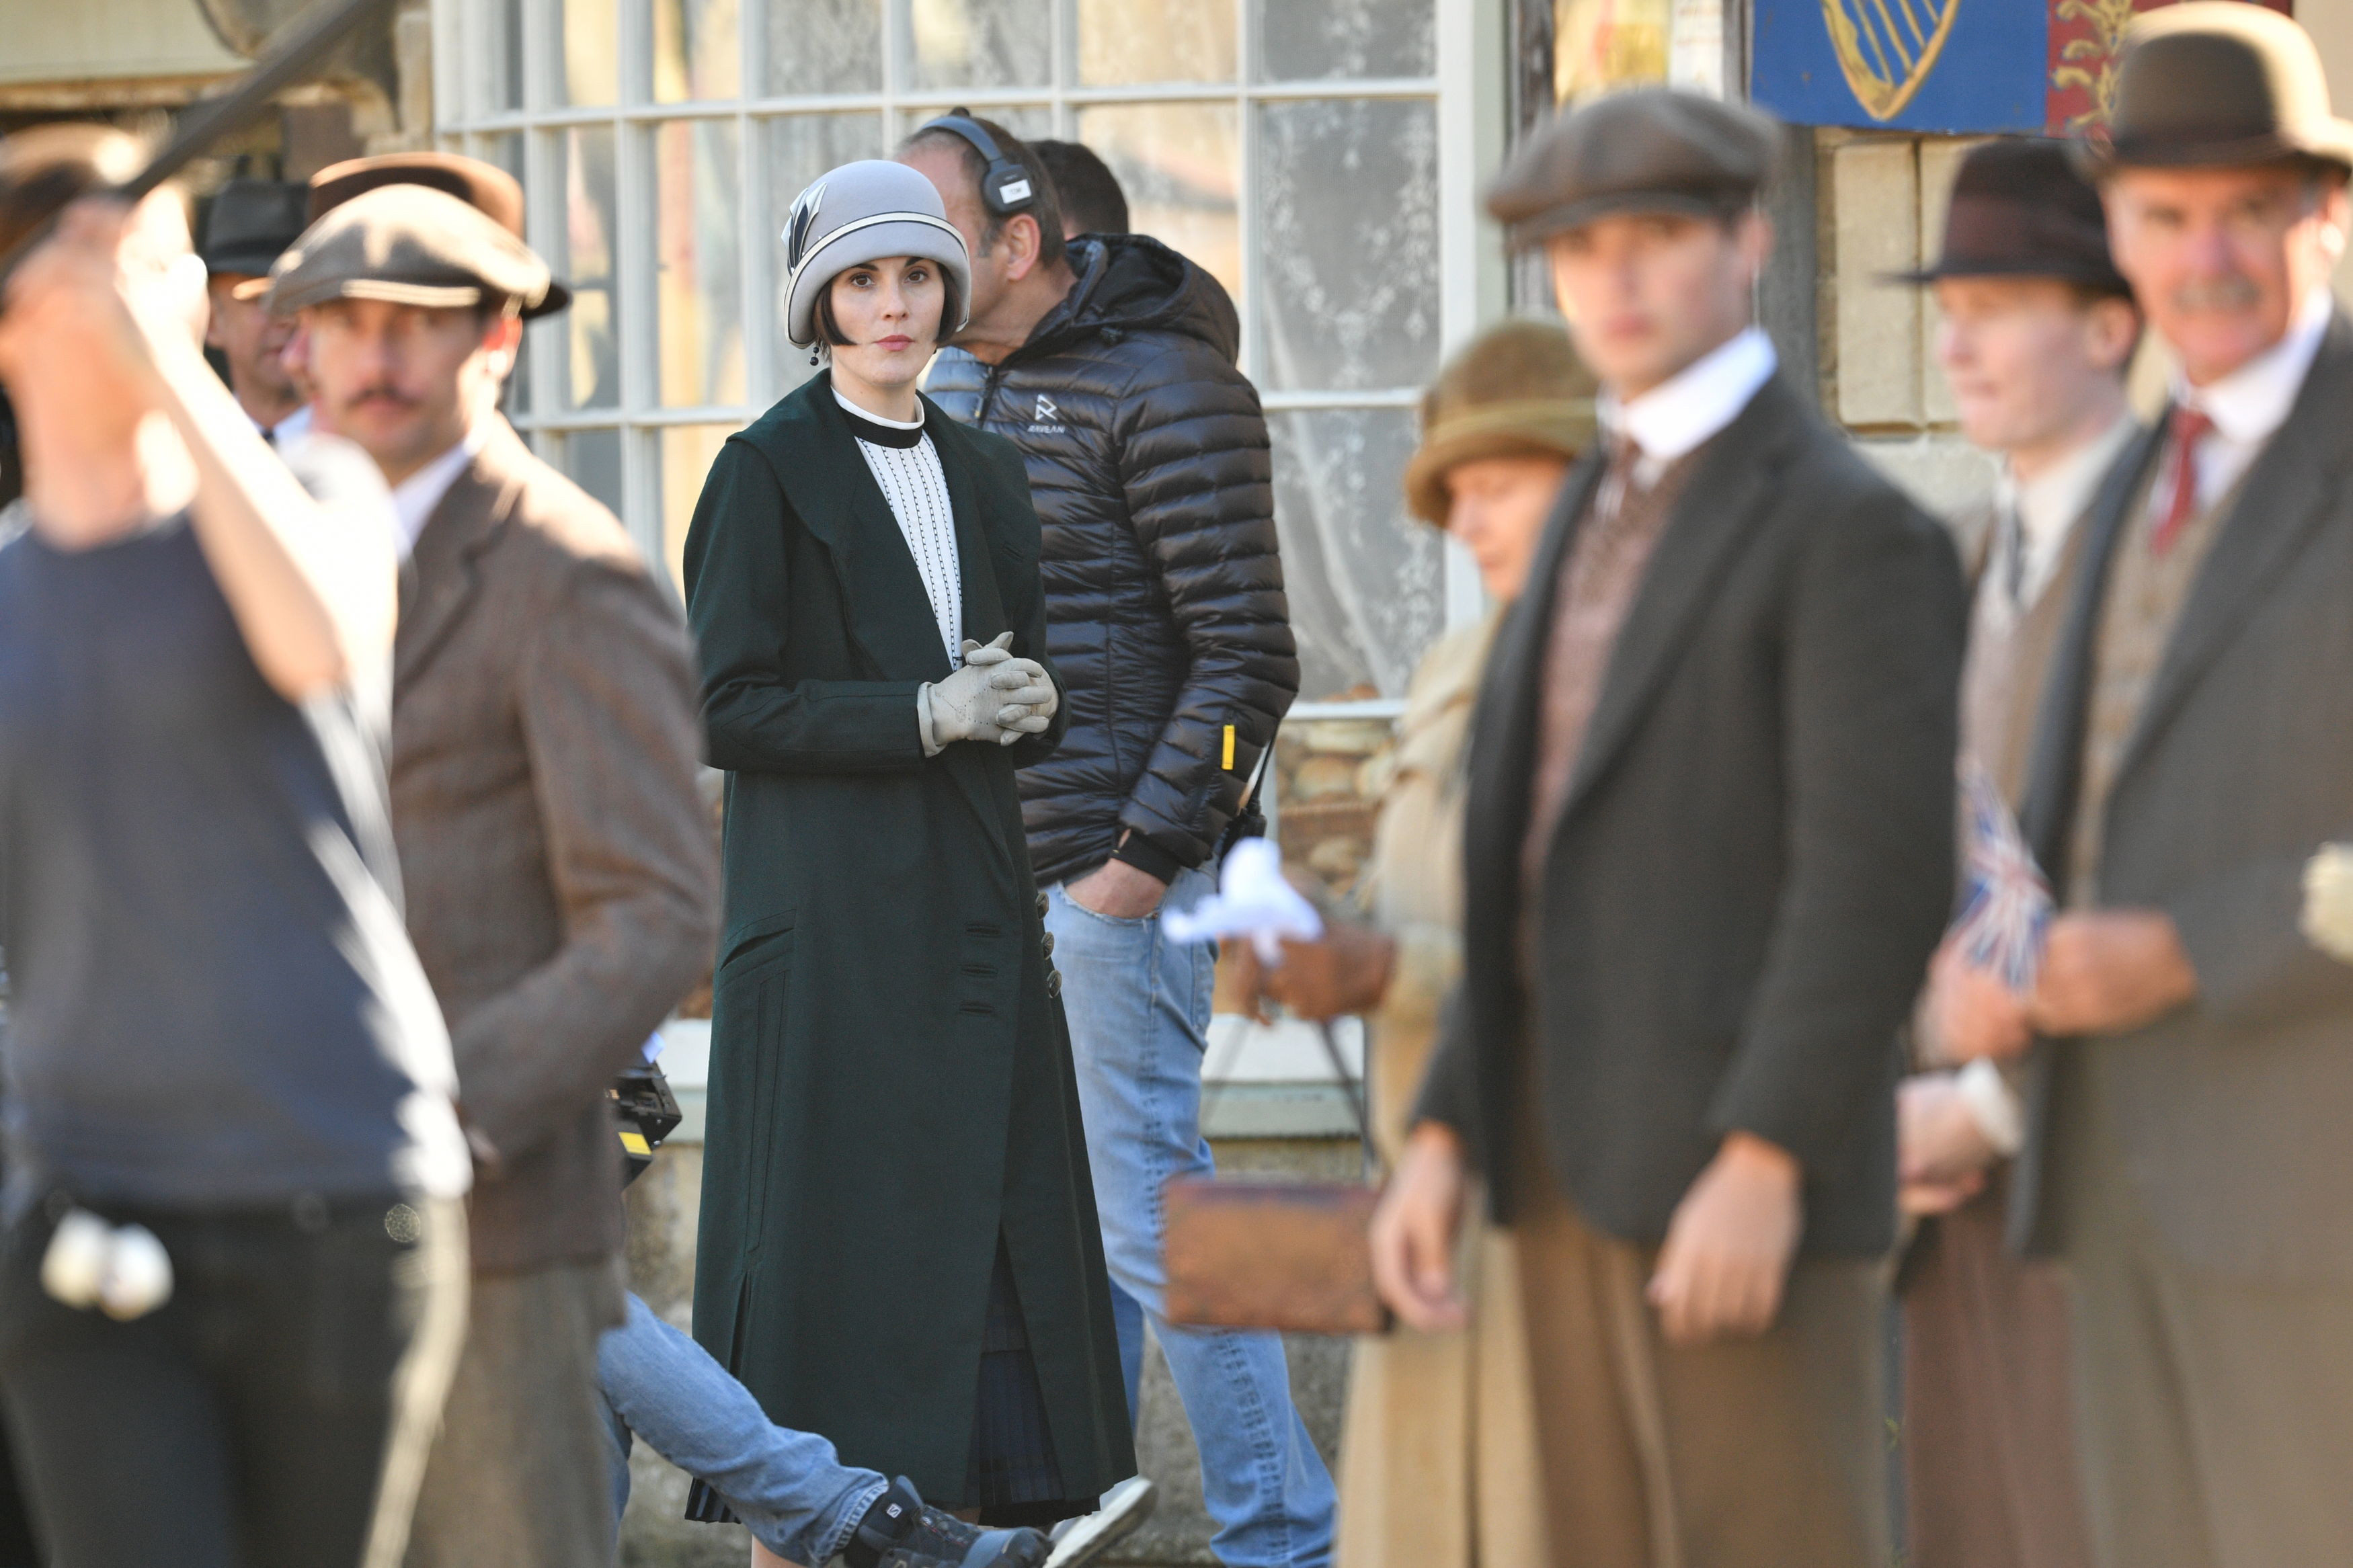 Michelle Dockery on the 'Downton Abbey' film set.